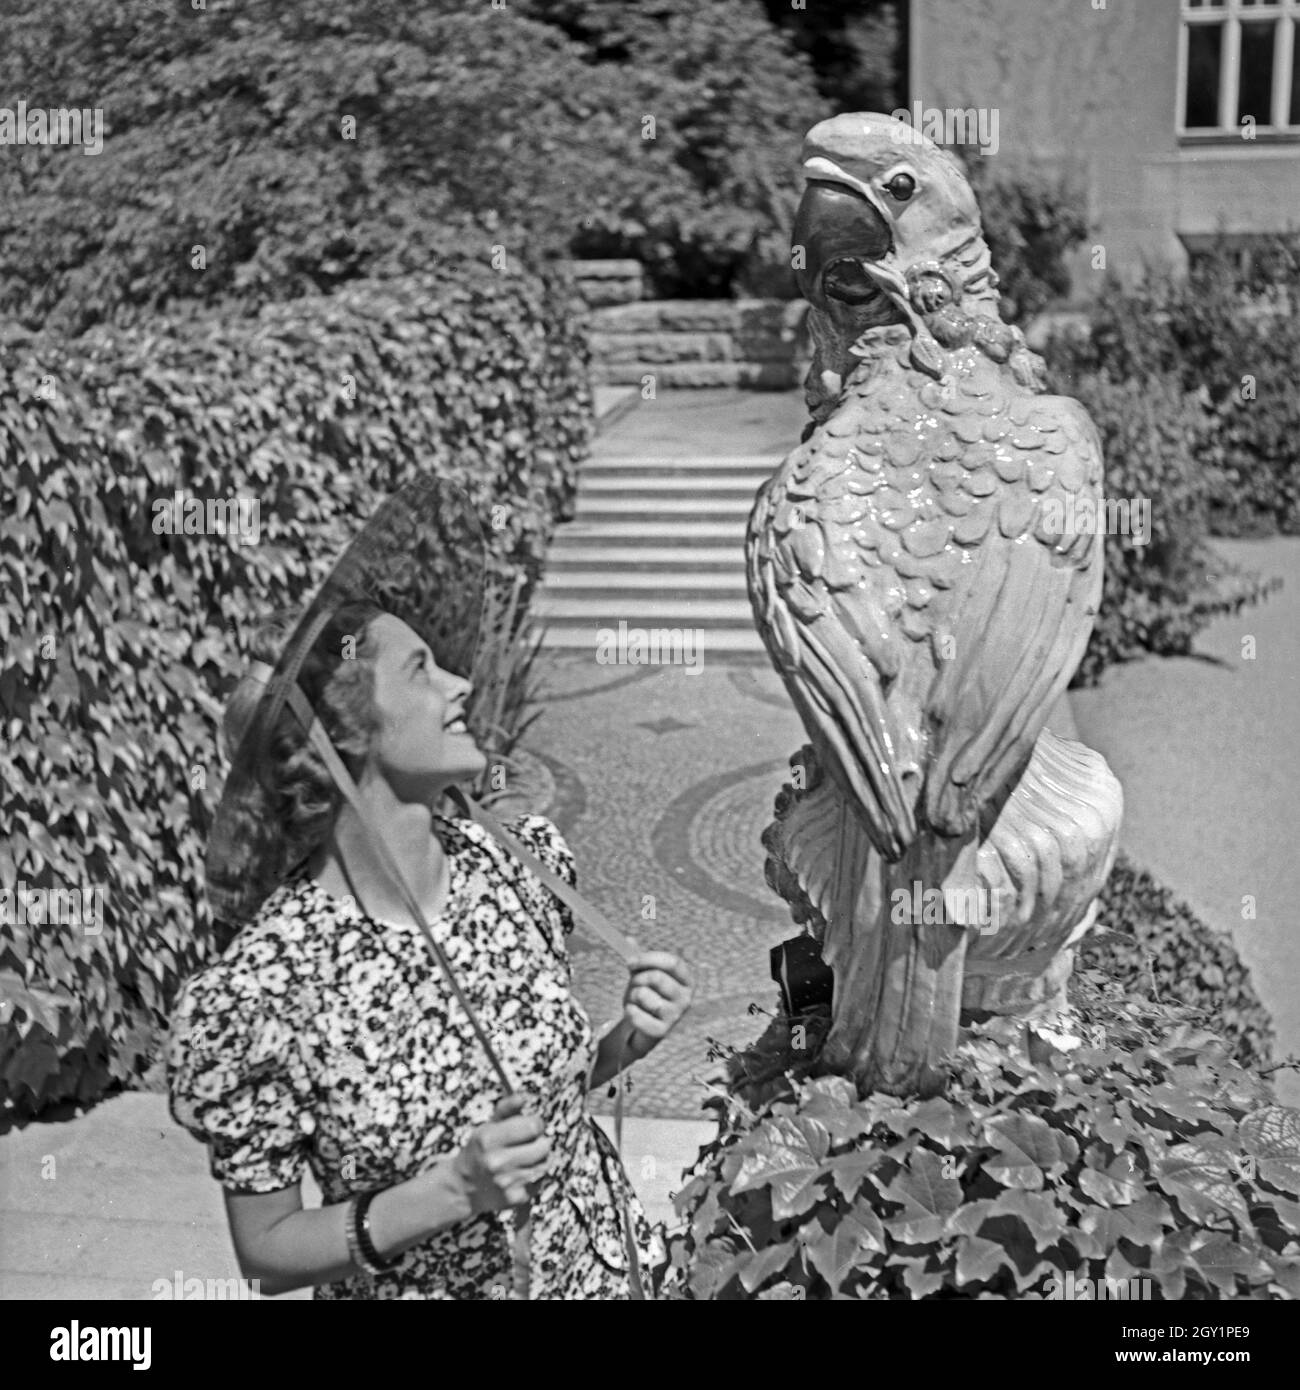 Eine junge Frau bei einer Papageienstatue in einem Park, Deutschland 1930 er Jahre. Une jeune femme et une sculpture d'un perroquet dans un jardin public, l'Allemagne des années 1930. Banque D'Images